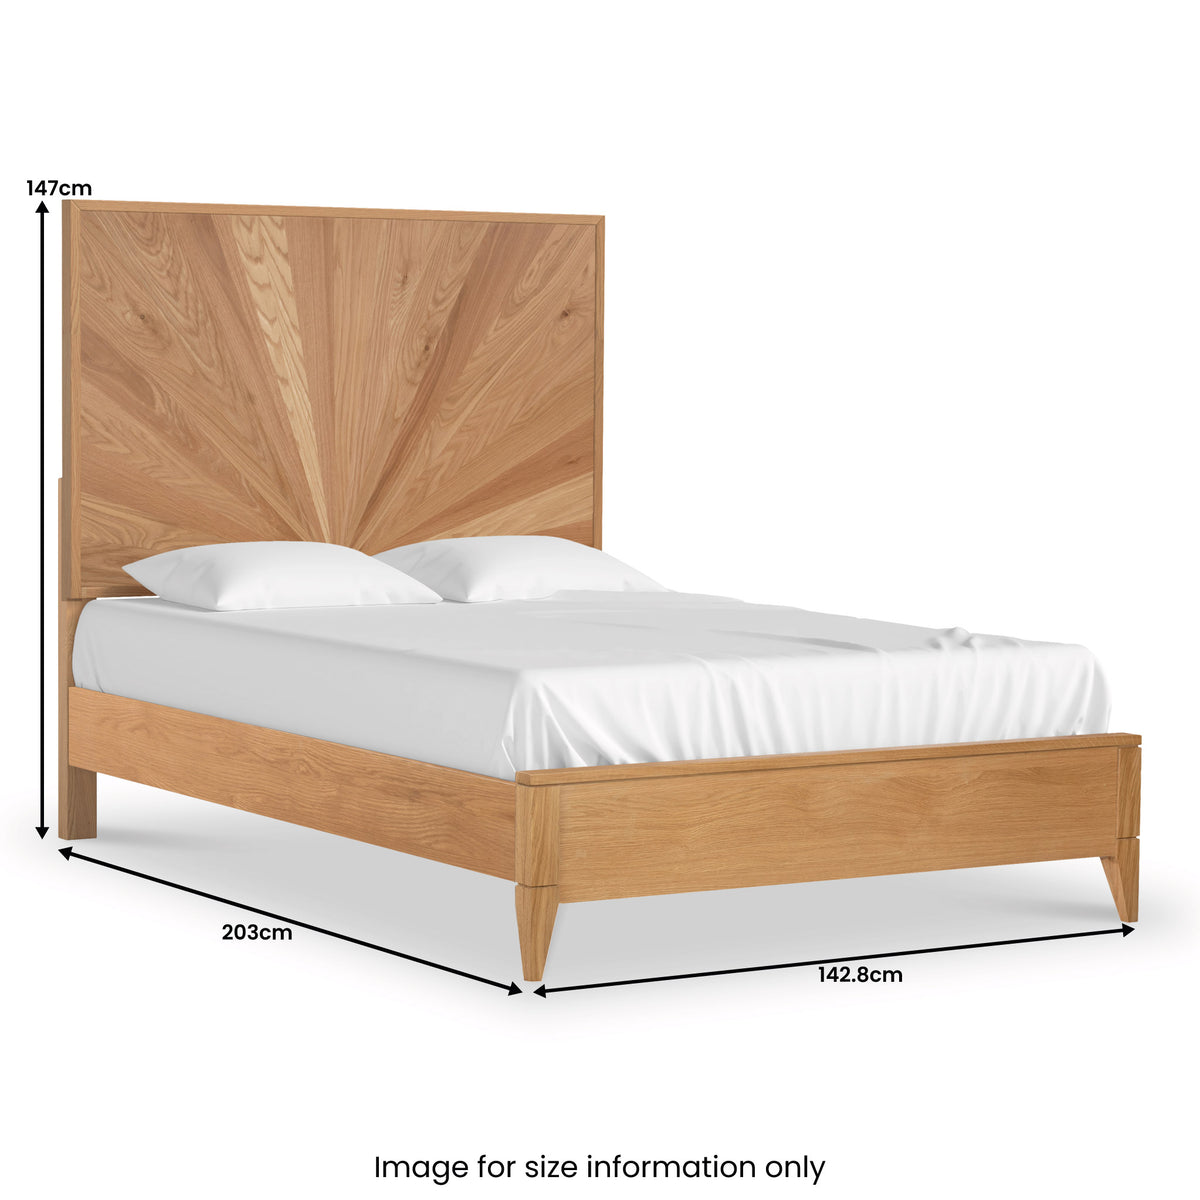 Sunburst Oak Double Bed Frame dimensions